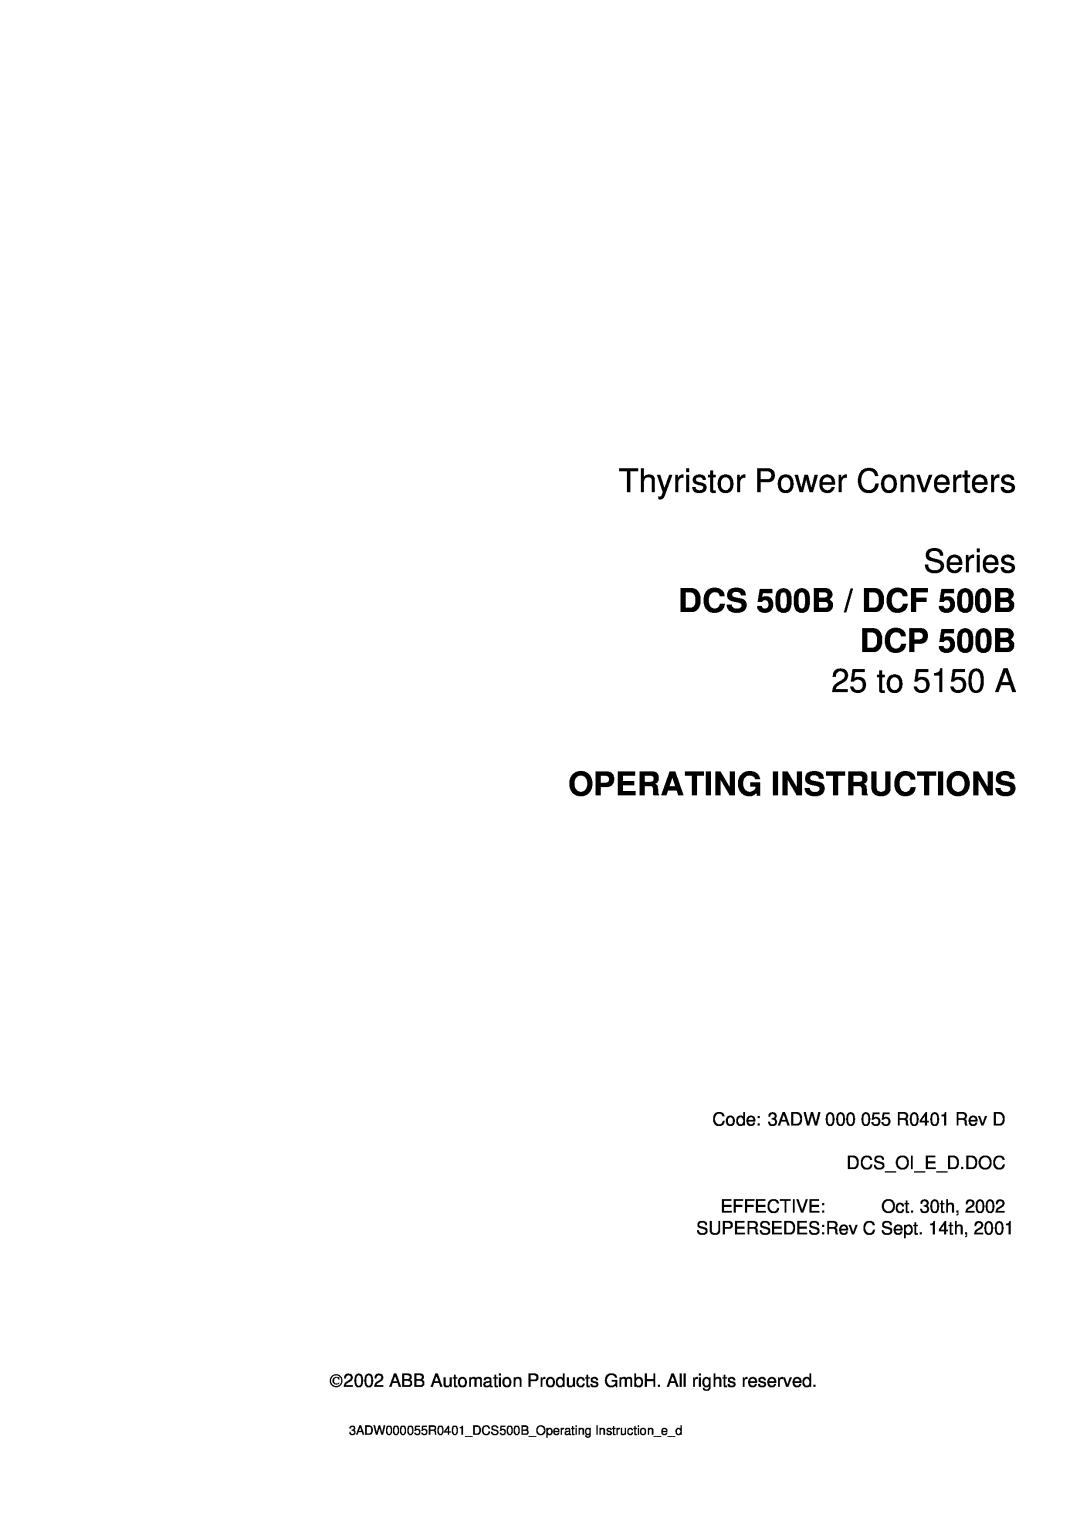 DCS manual Thyristor Power Converters Series, DCS 500B / DCF 500B DCP 500B, 25 to 5150 A, Operating Instructions 